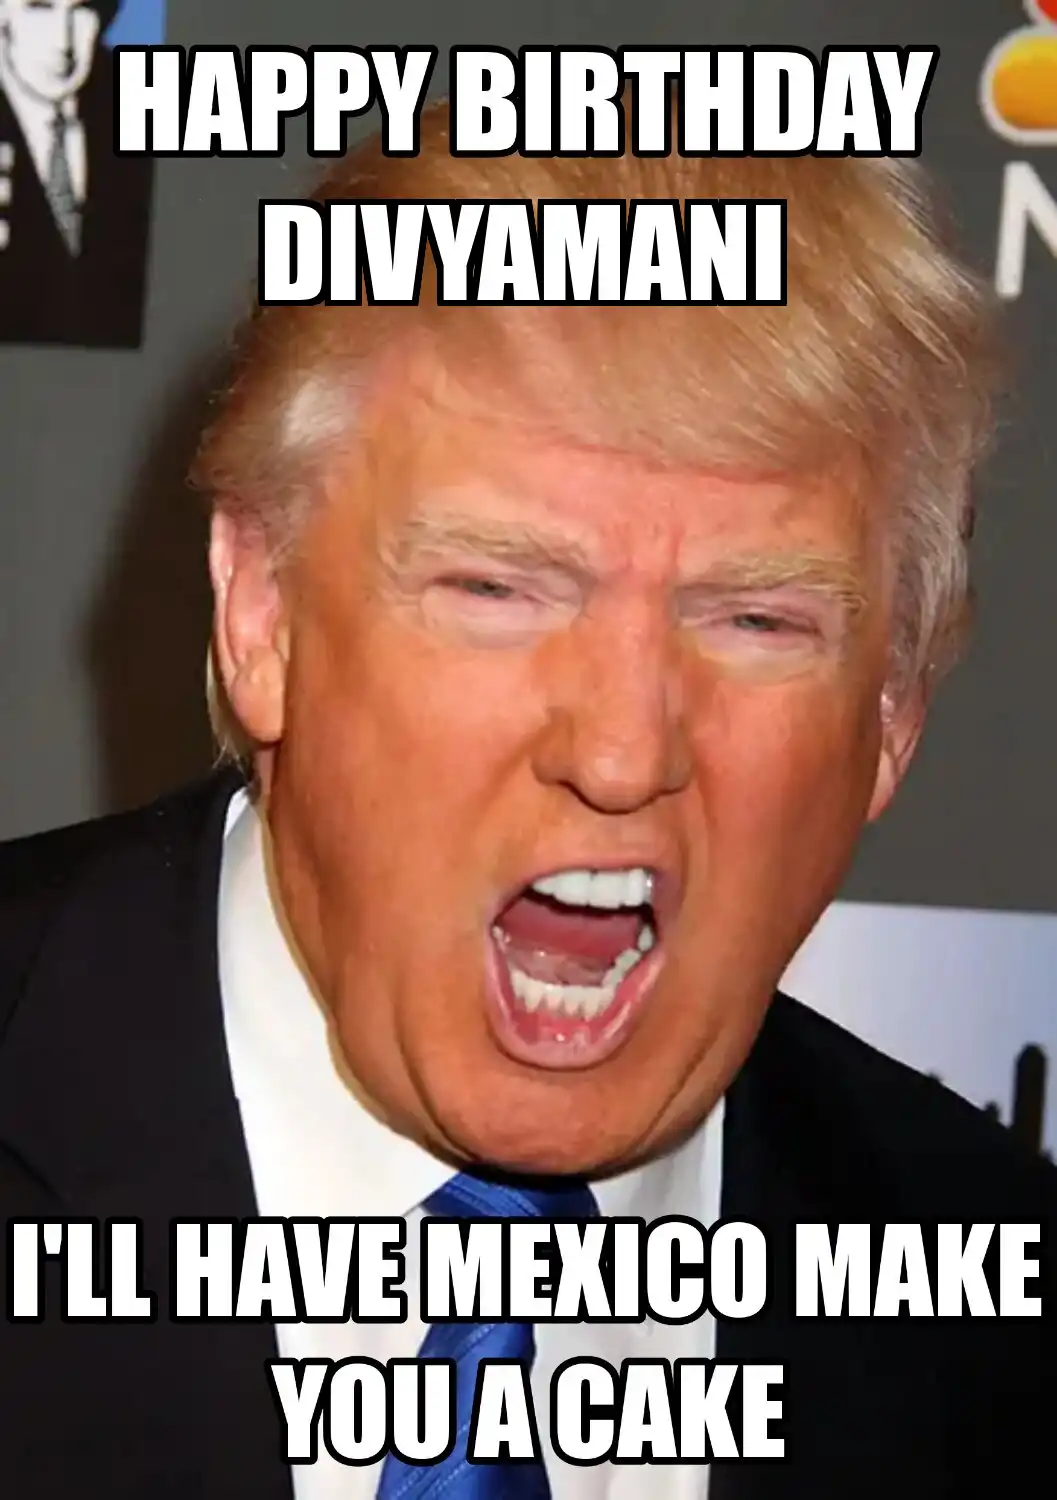 Happy Birthday Divyamani Mexico Make You A Cake Meme